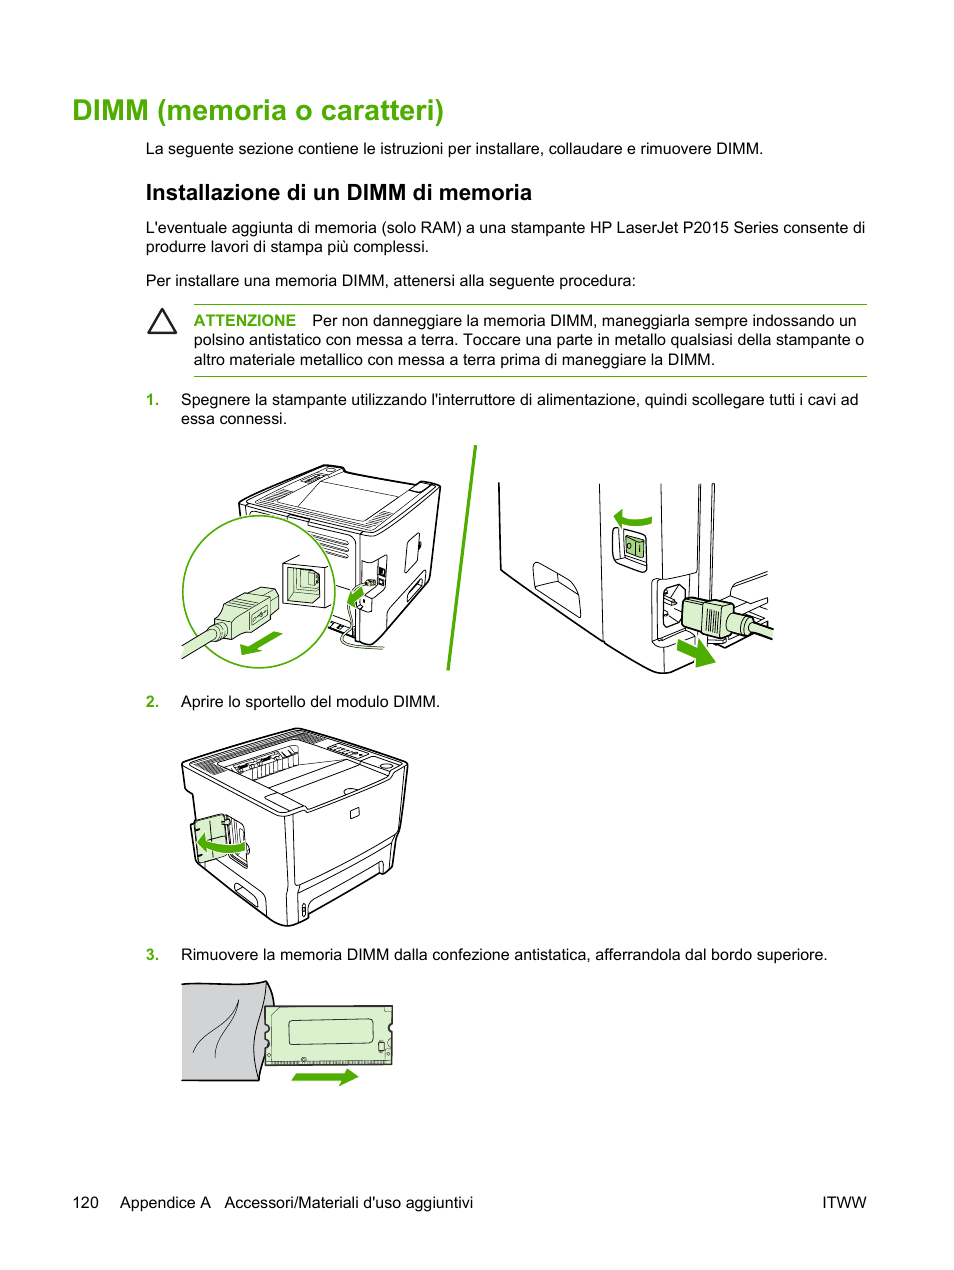 Dimm (memoria o caratteri), Installazione di un dimm di memoria | HP LaserJet P2015 Manuale d'uso | Pagina 130 / 168